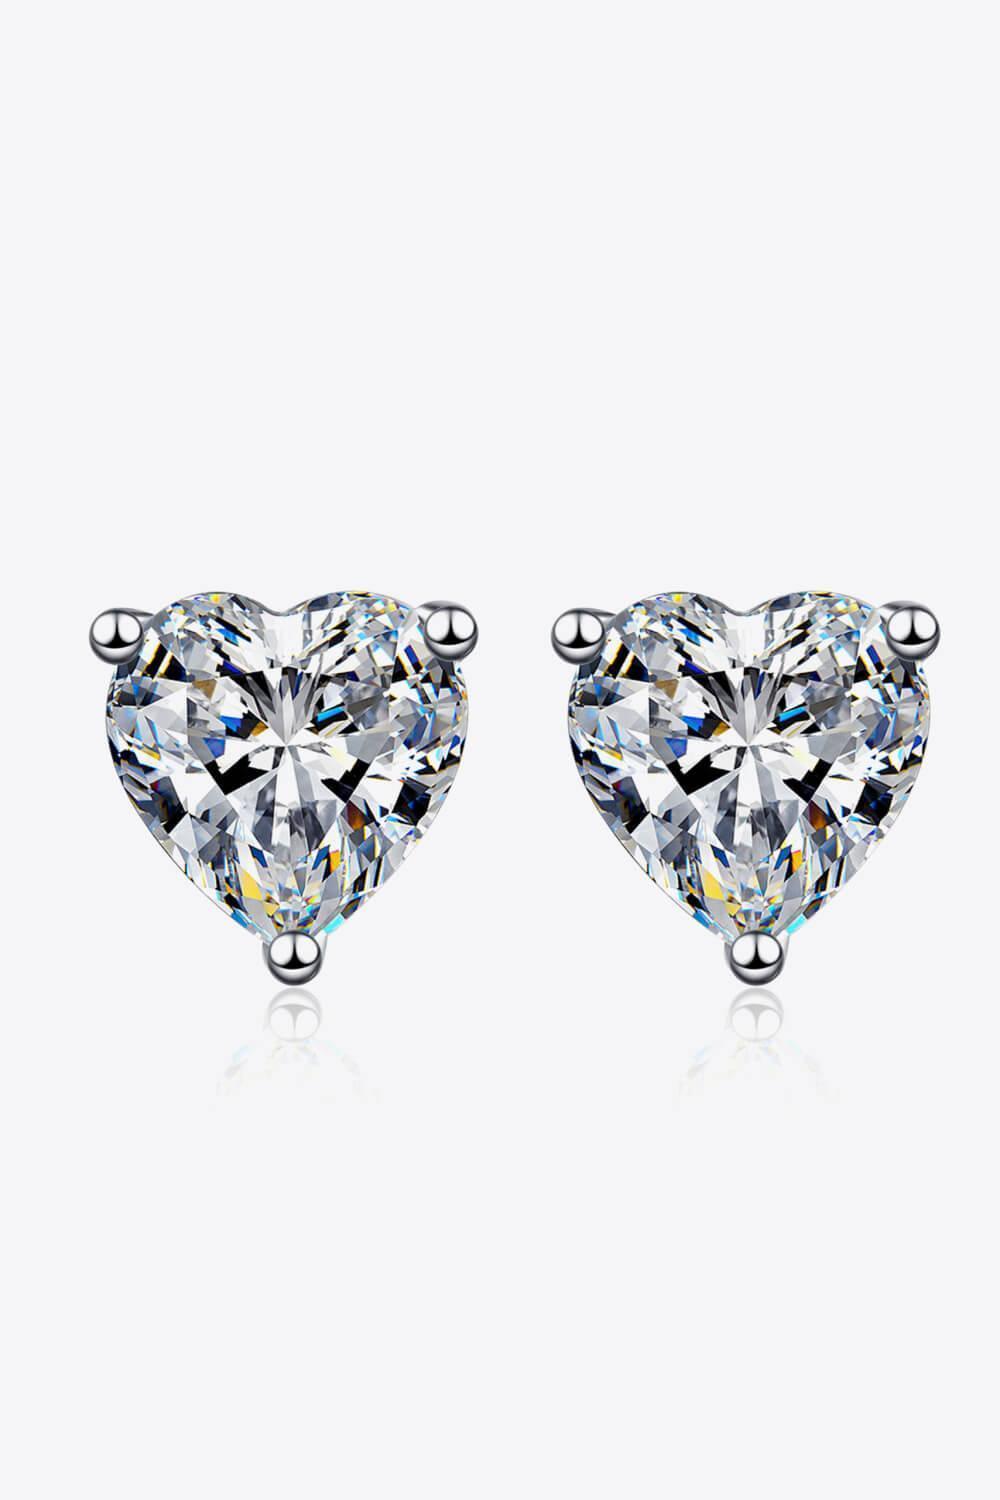 Delicately Cut Heart-Shaped 2 Carat Moissanite Stud Earrings - MXSTUDIO.COM